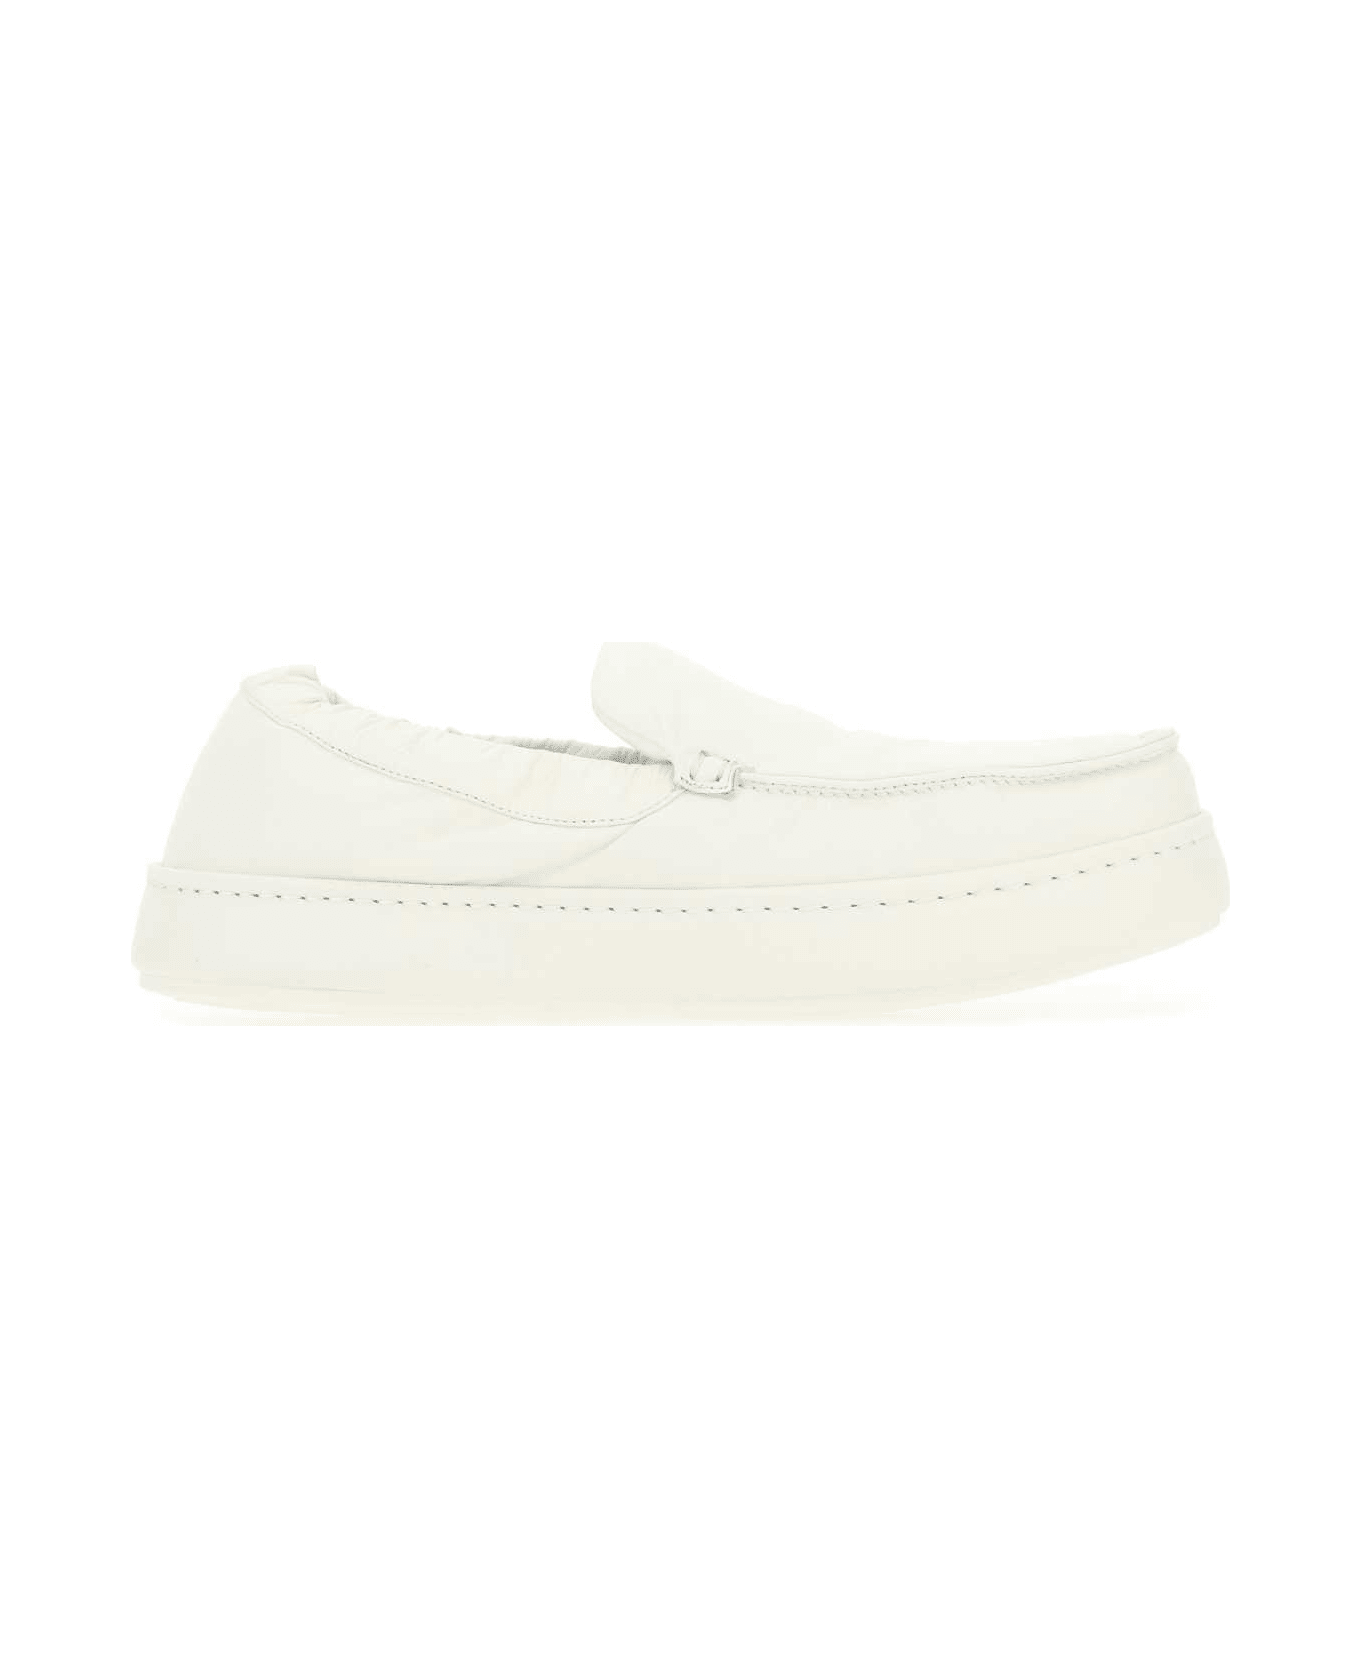 Zegna White Nappa Leather Loafers - LGI